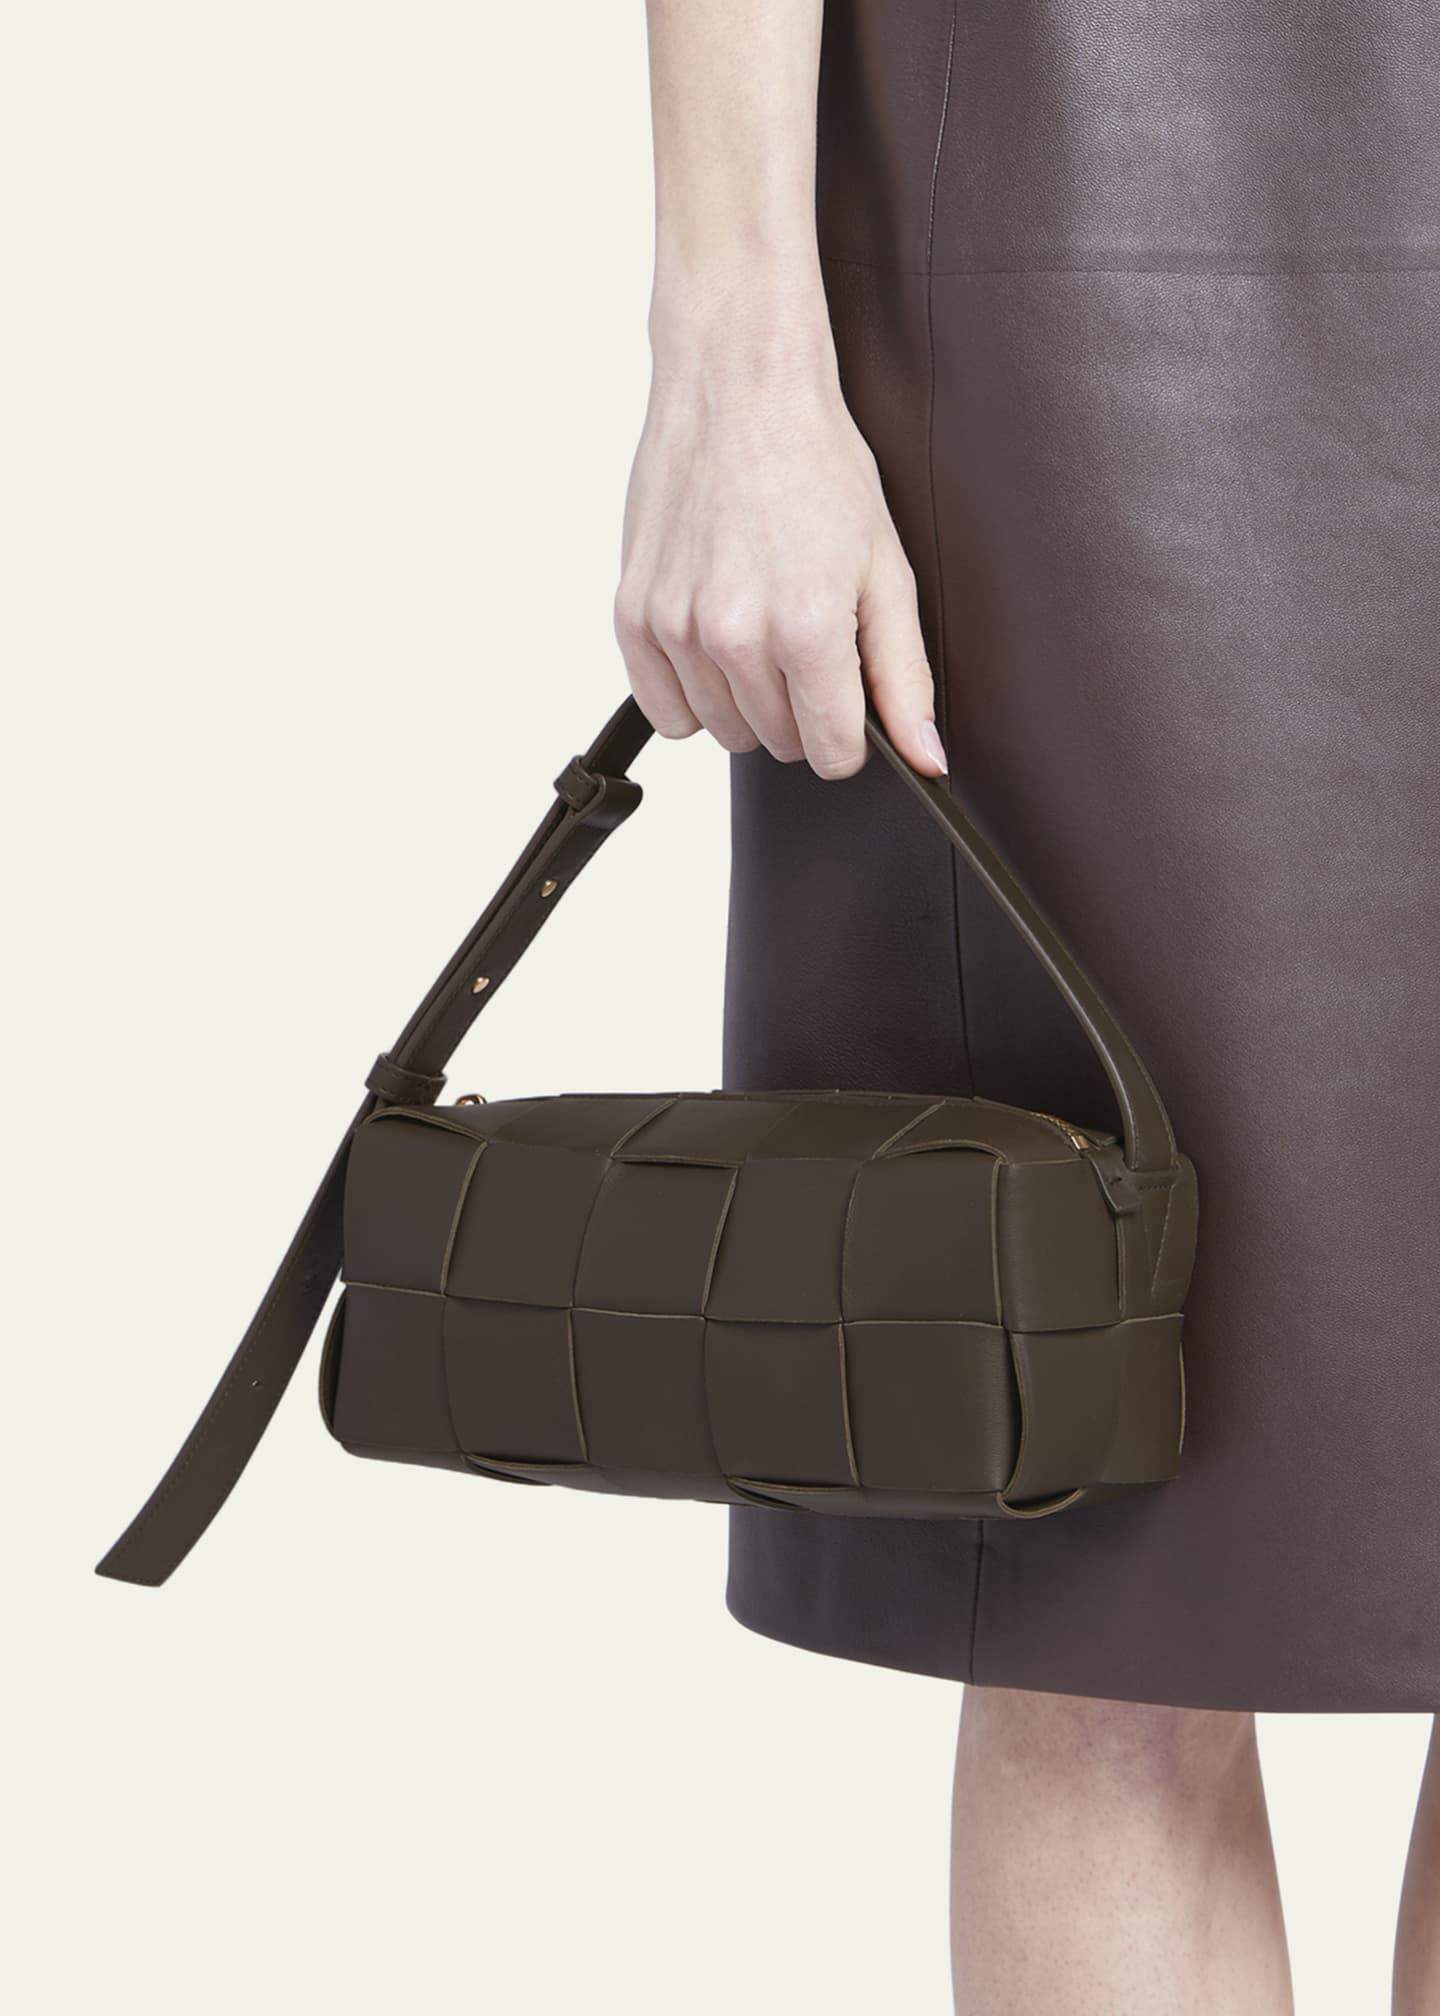 Bottega Veneta Cassette Intrecciato Leather Shoulder Bag - Bergdorf Goodman